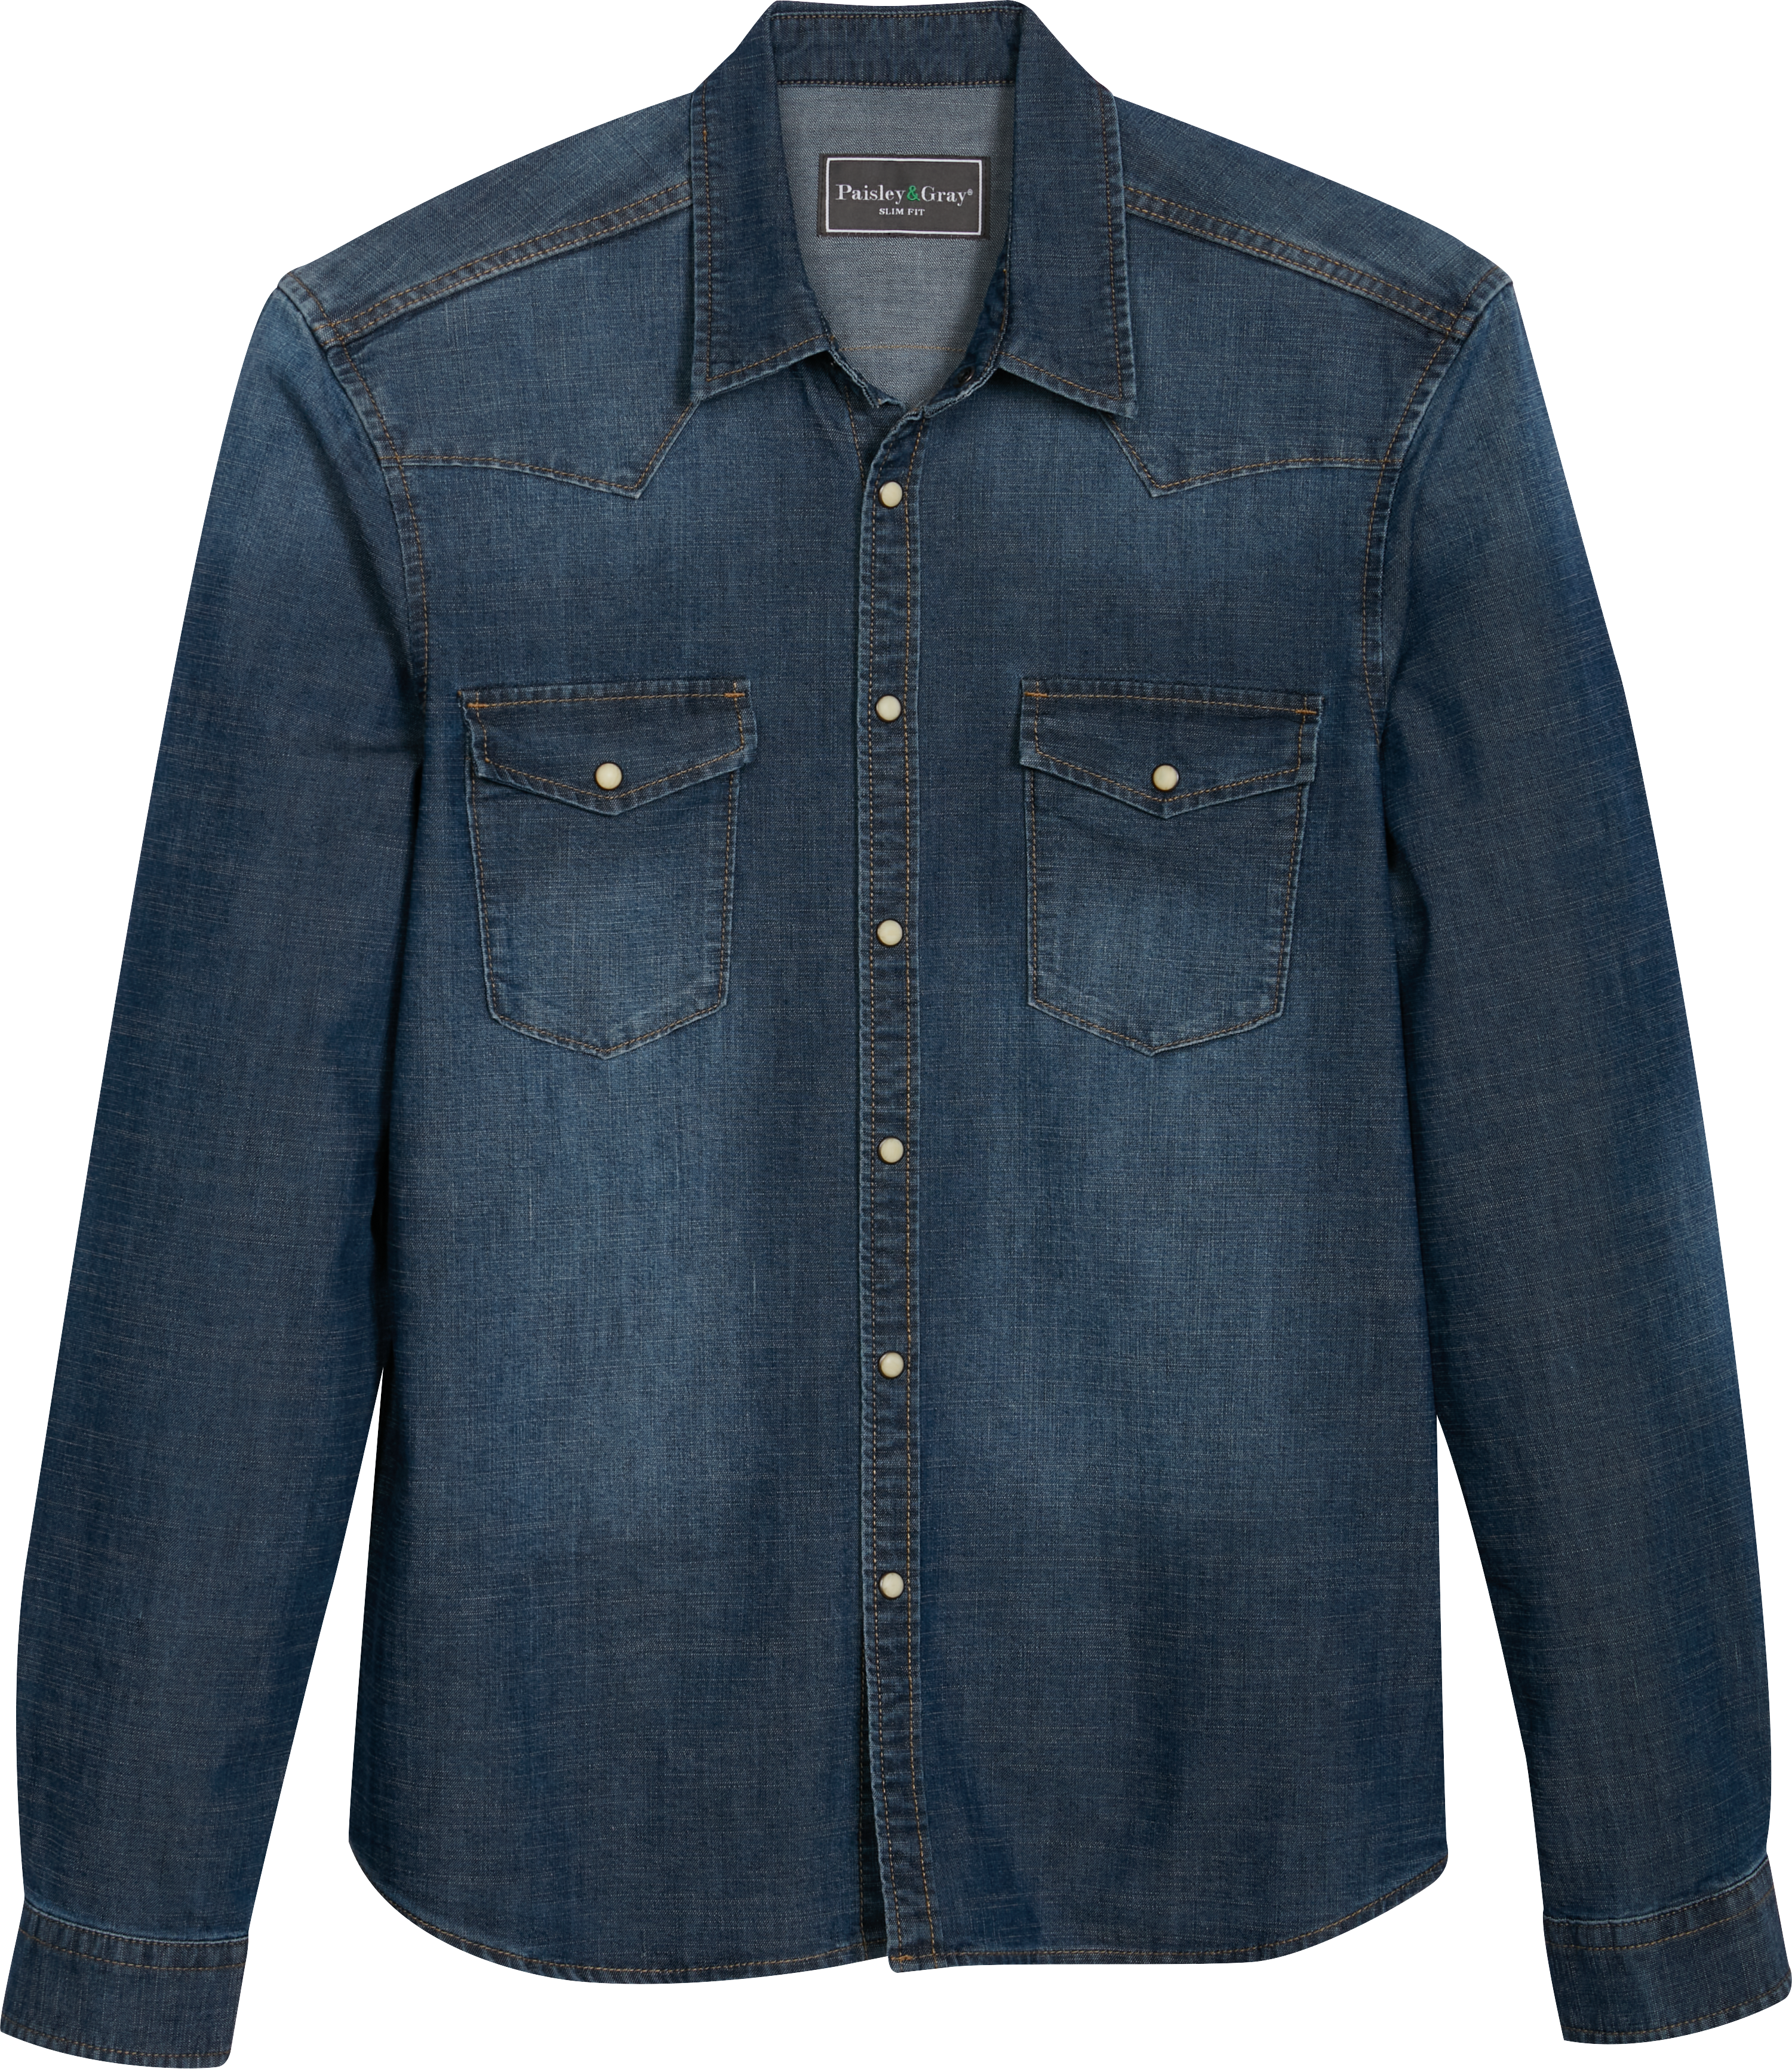 Paisley & Gray Slim Fit Spread Collar Denim Sport Shirt, Blue - Men's ...